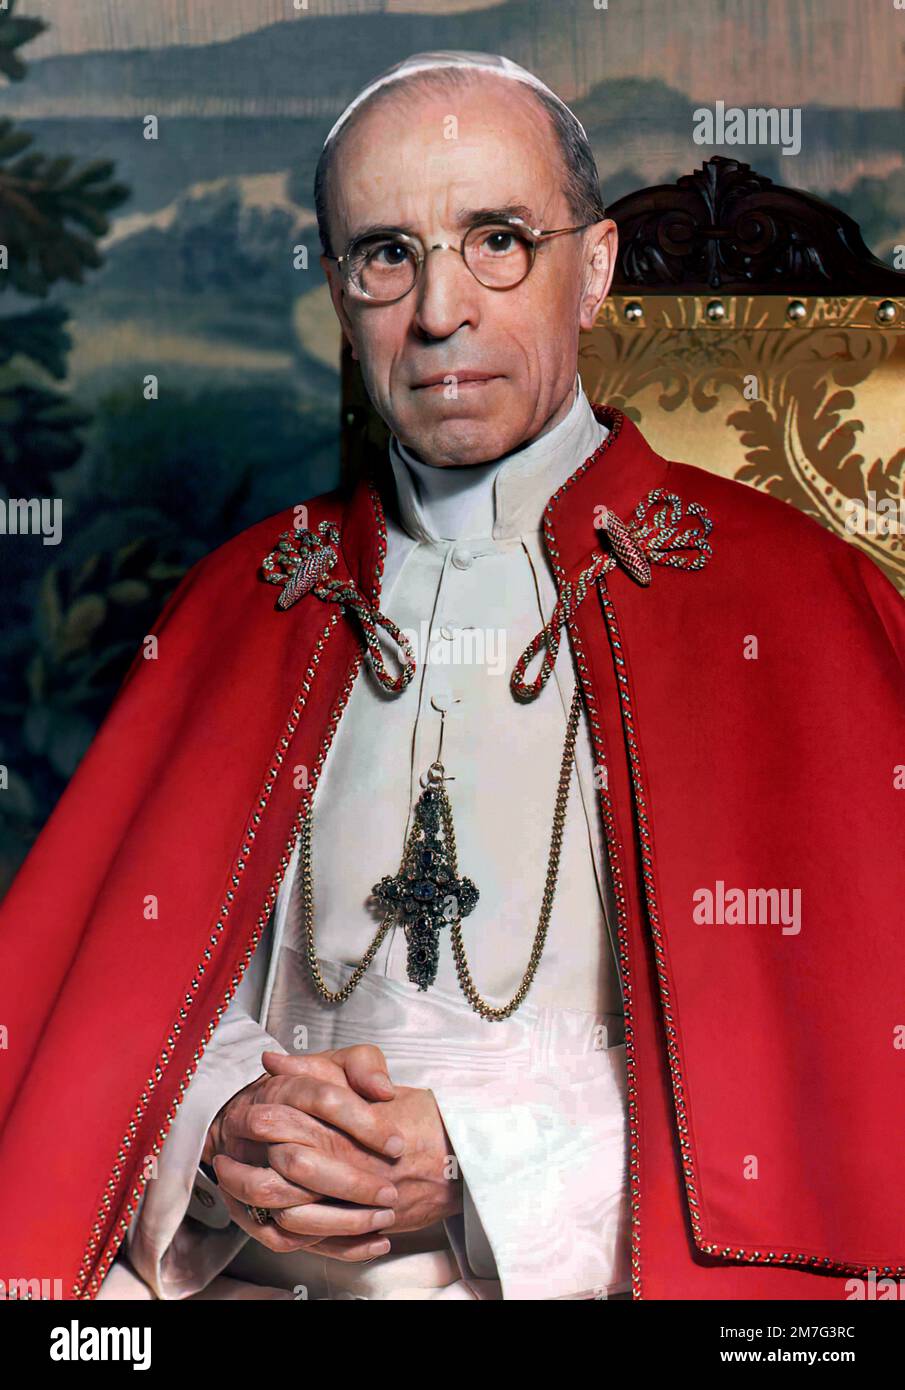 Pius XII Portrait des italienischen Papstes Pius XII (B. Eugenio Maria Giuseppe Giovanni Pacelli, 1876-1958). Pius XII war von 1939 bis zu seinem Tod im Oktober 1958 Papst. Stockfoto